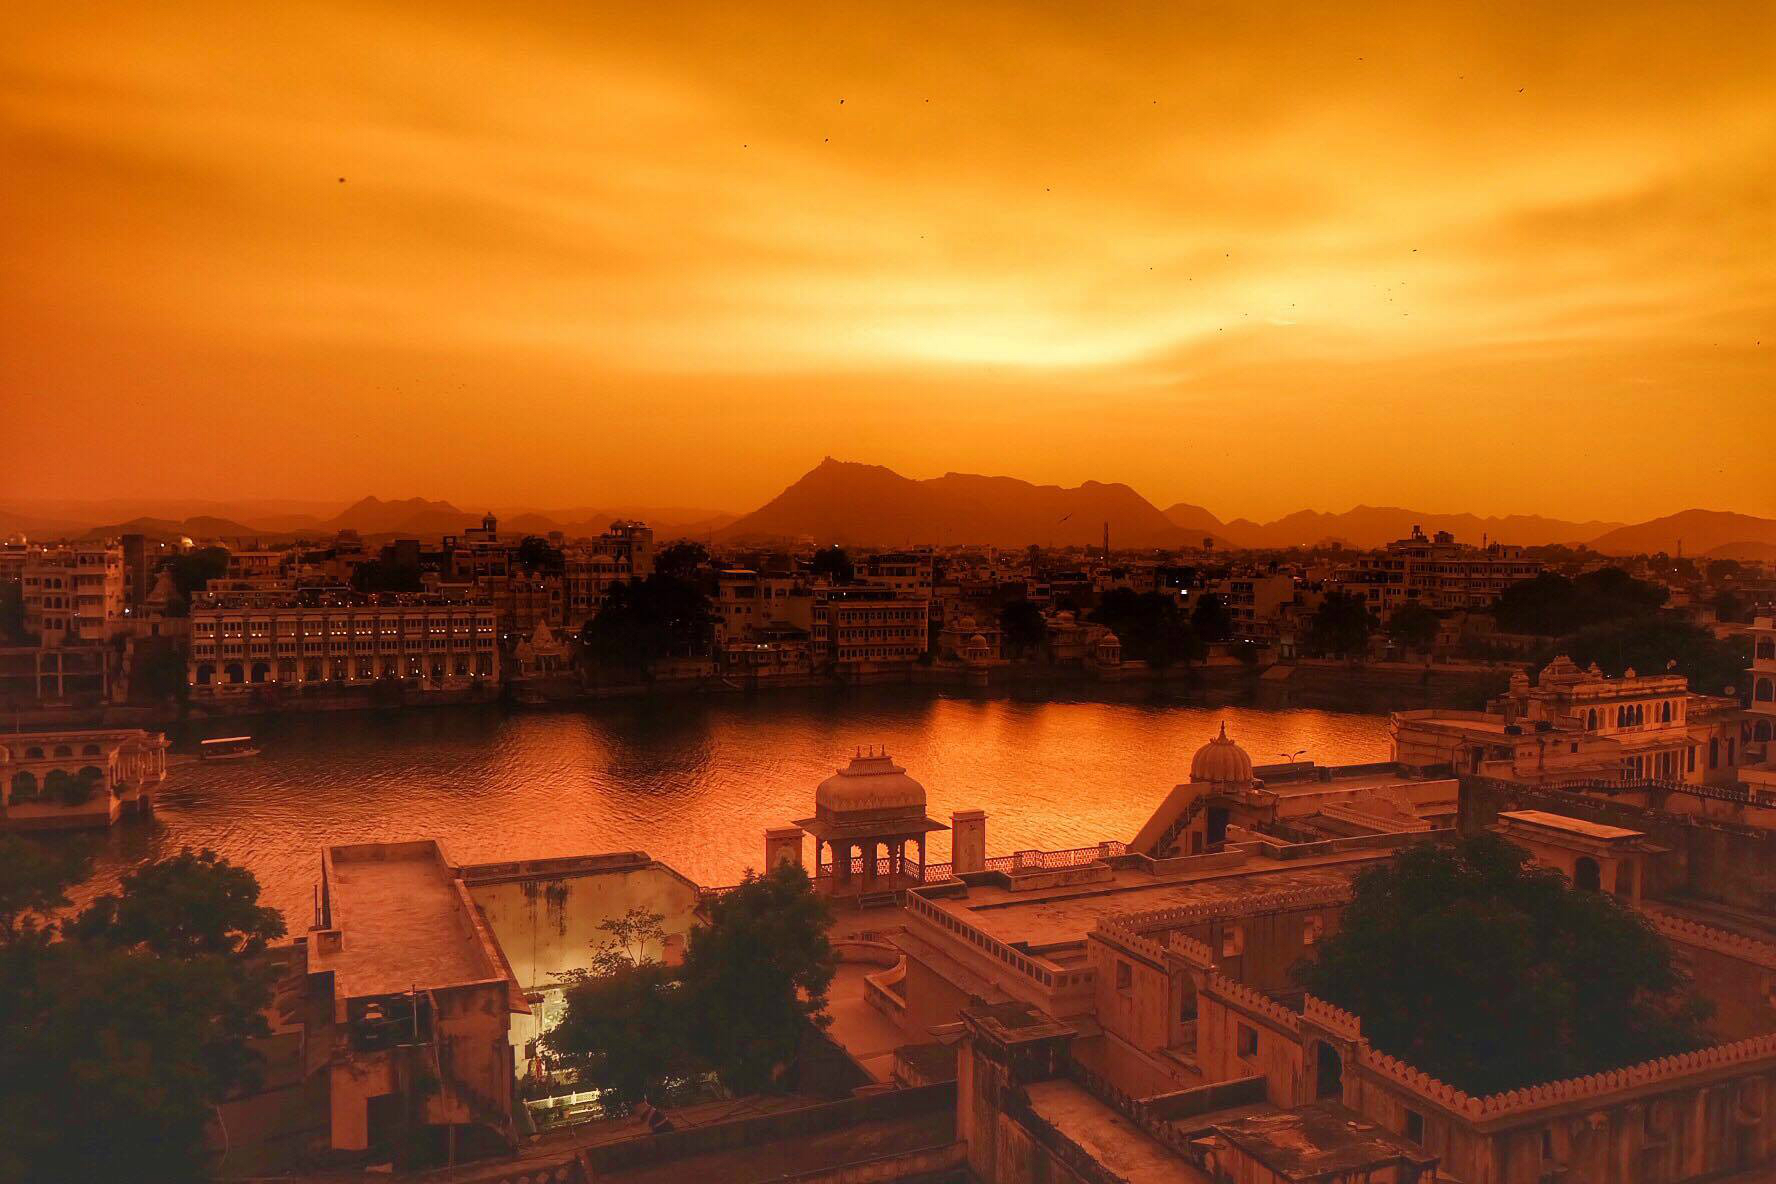 Sunset over Udaipur, India